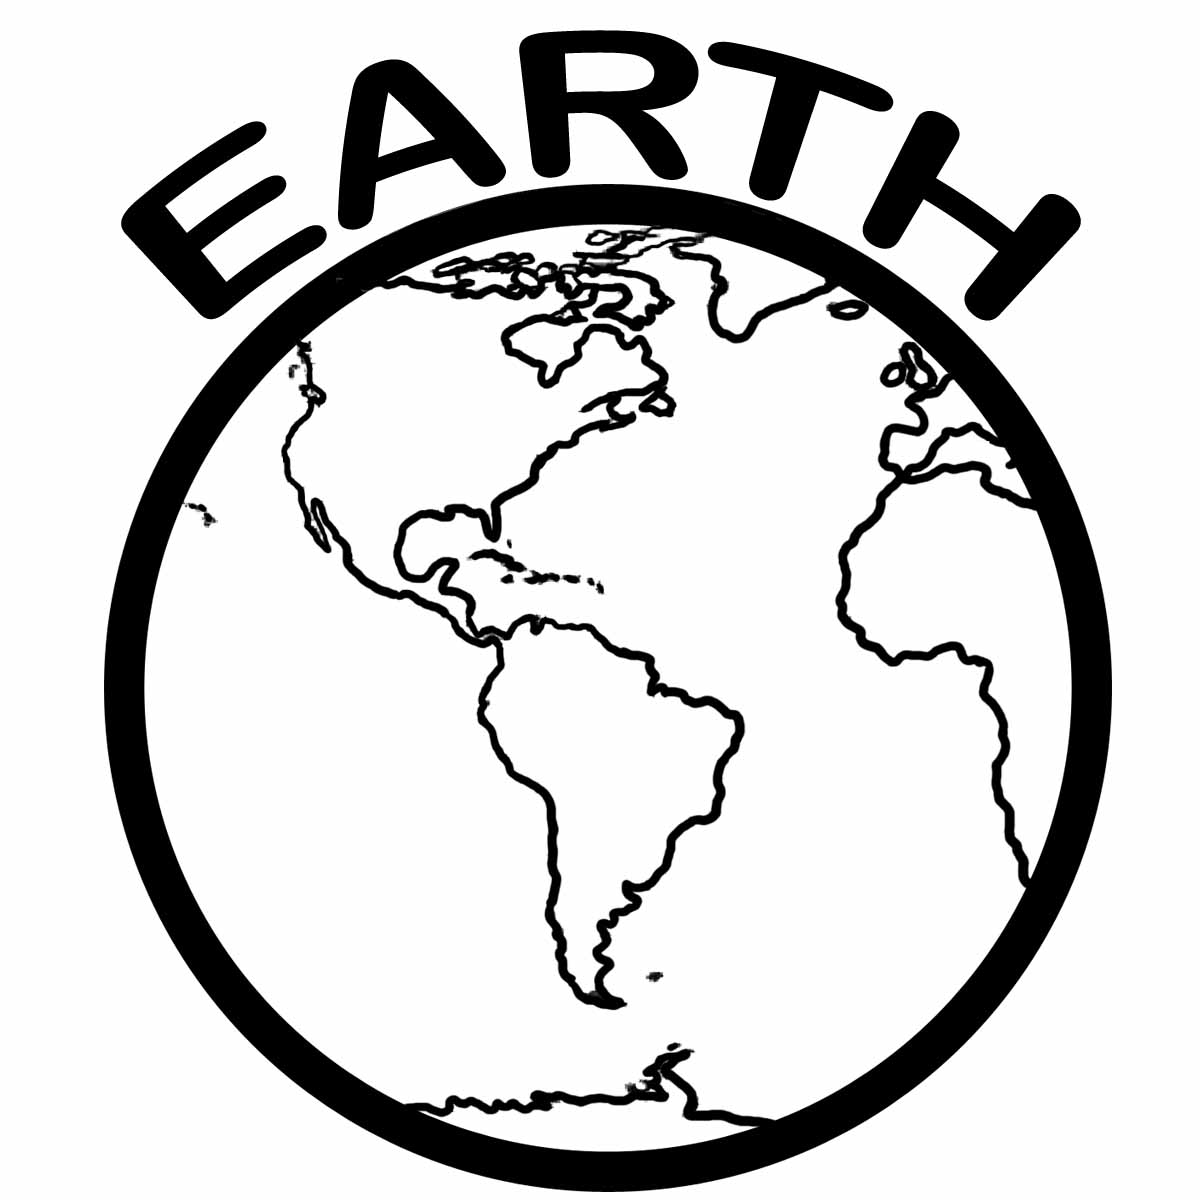 clip art of the earth globe - photo #48